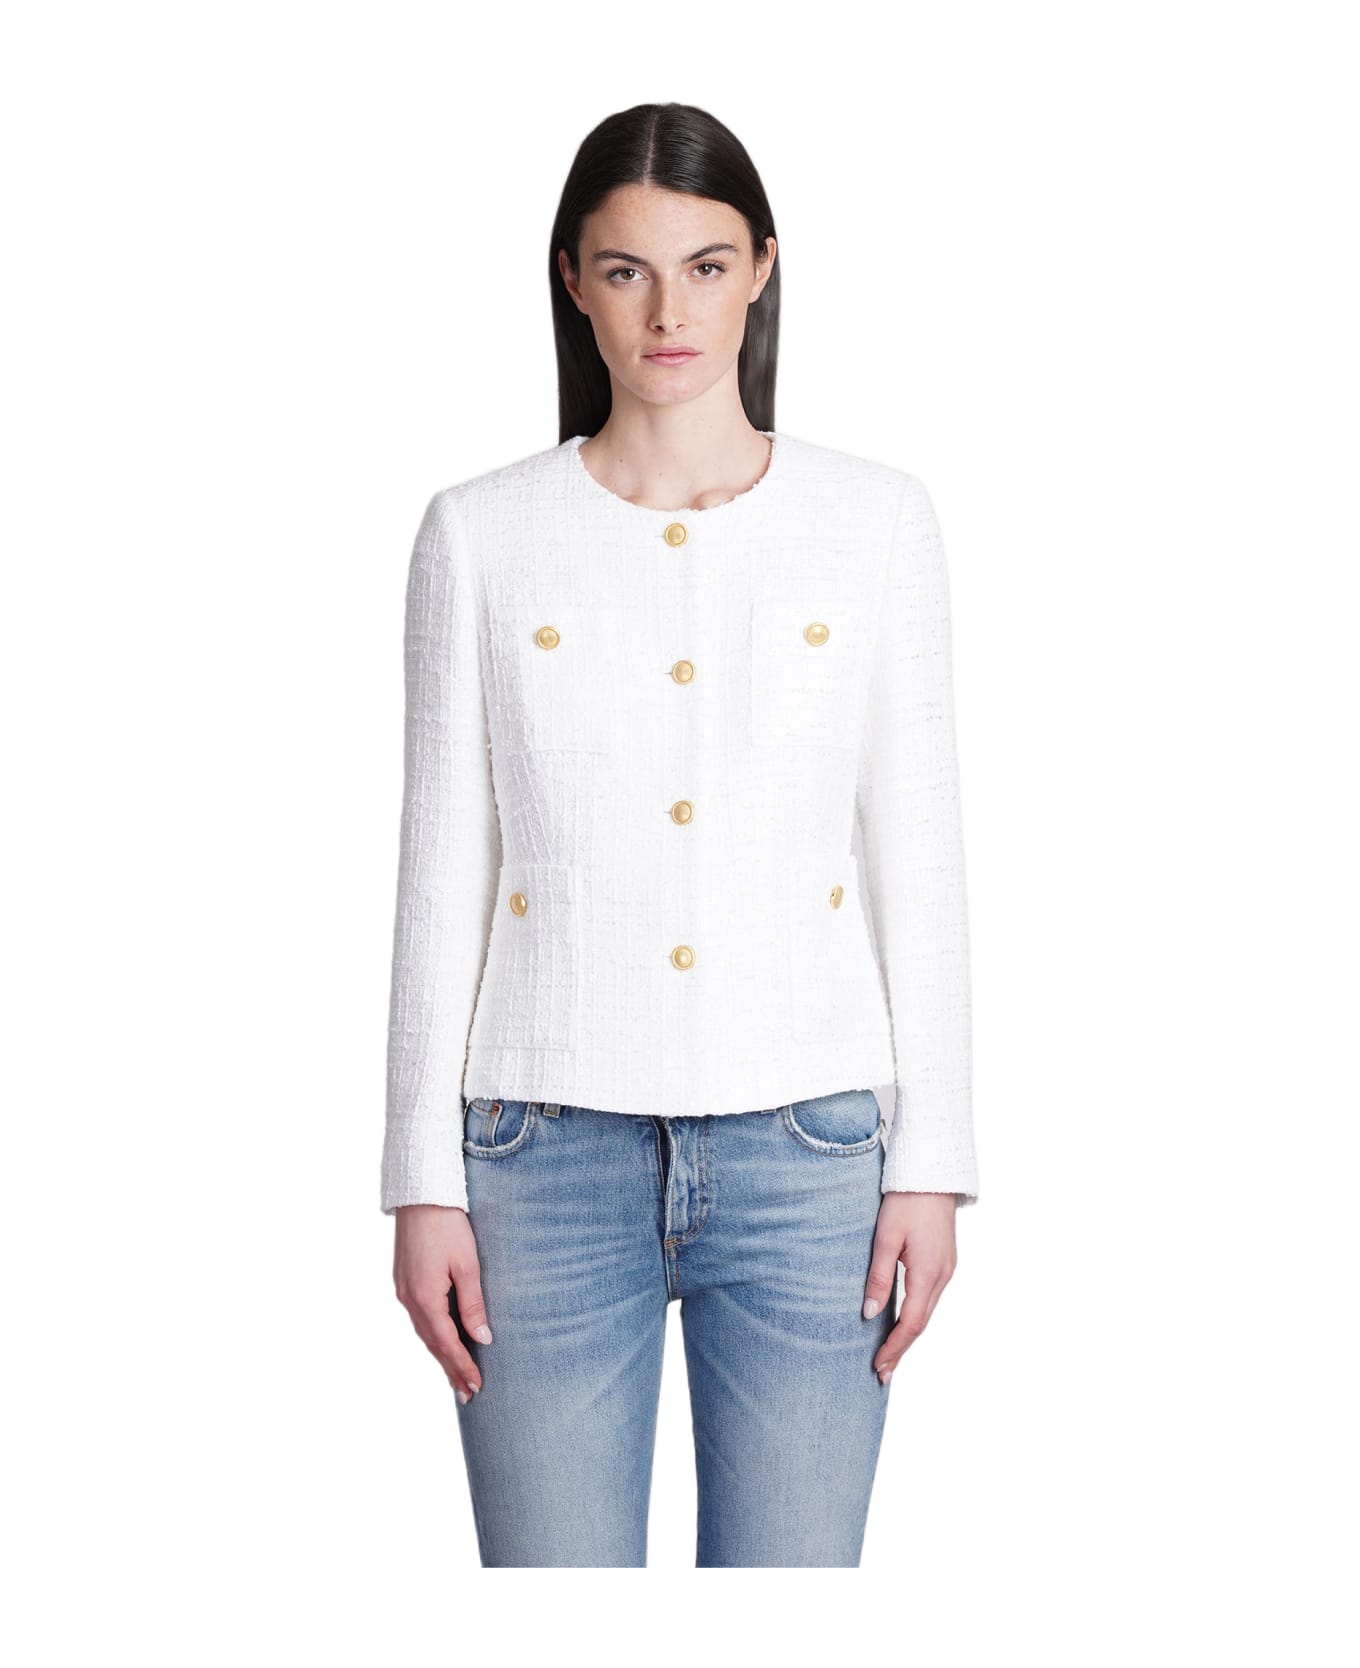 Tagliatore 0205 Beverly Casual Jacket In White Cotton - white